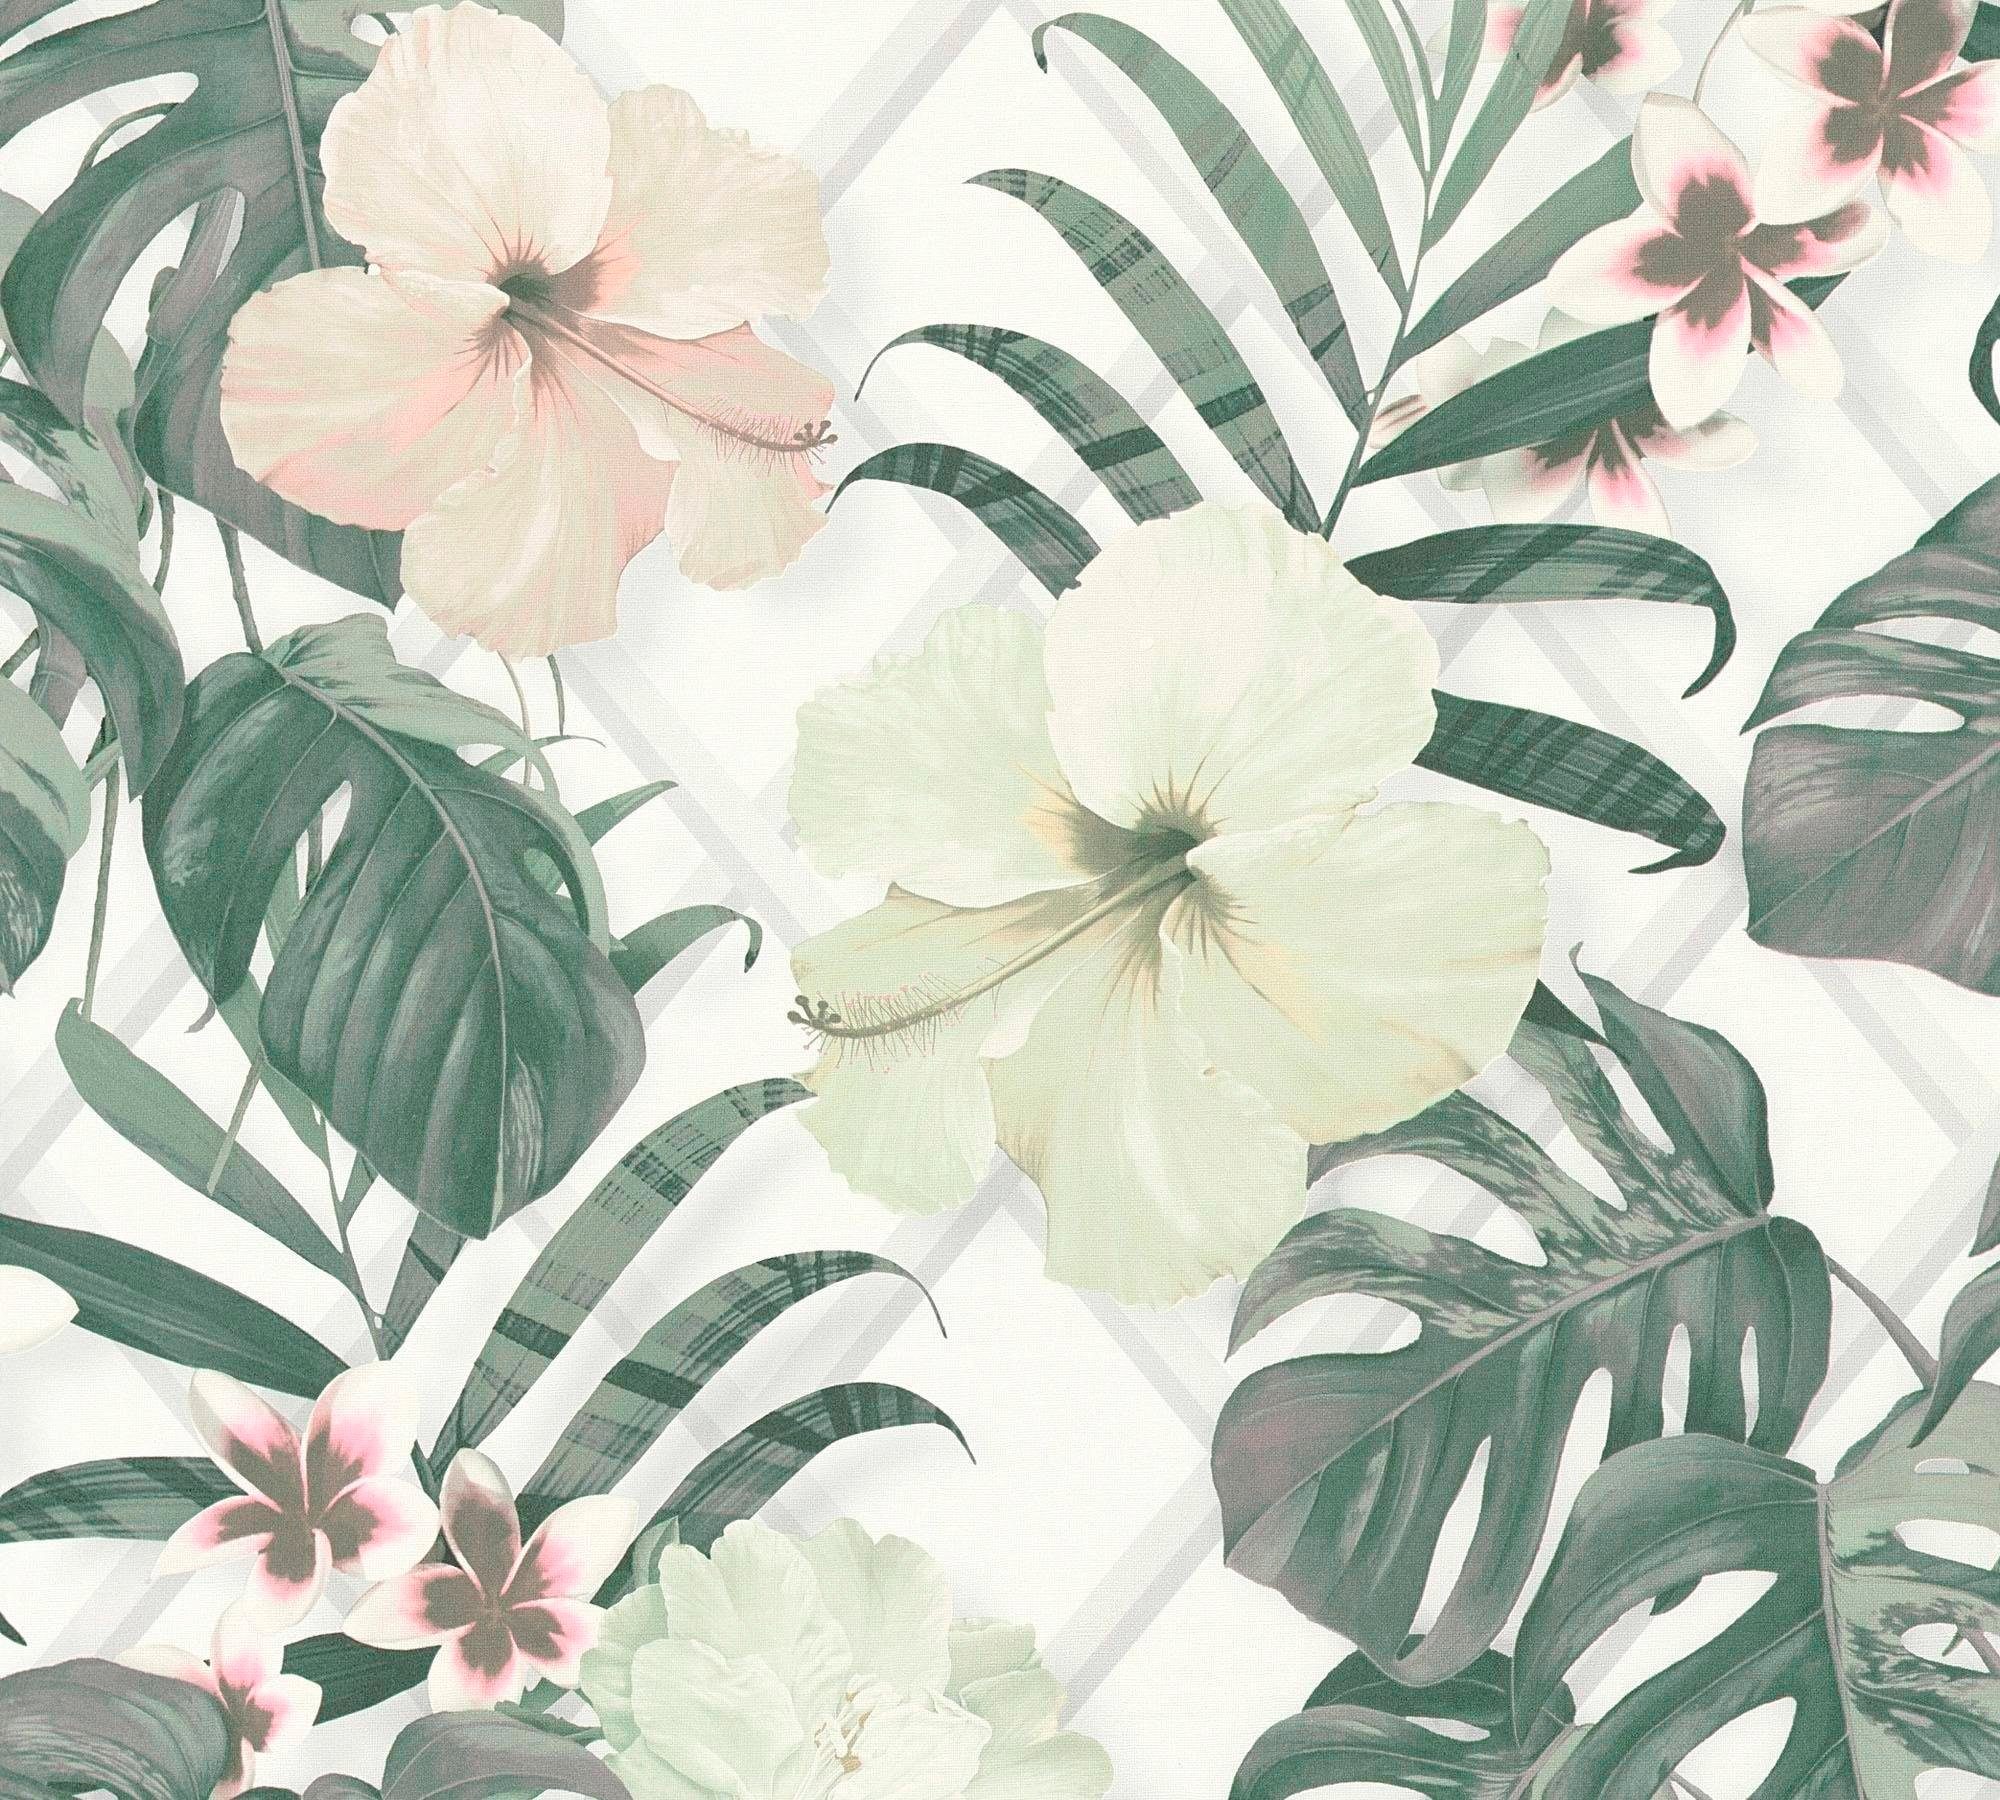 Blumentapete MICHALSKY LIVING A.S. Vliestapete floral, Designer Création Dream Again, geblümt, METROPOLIS grün/hellgrün/beige/weiß BY Tapete